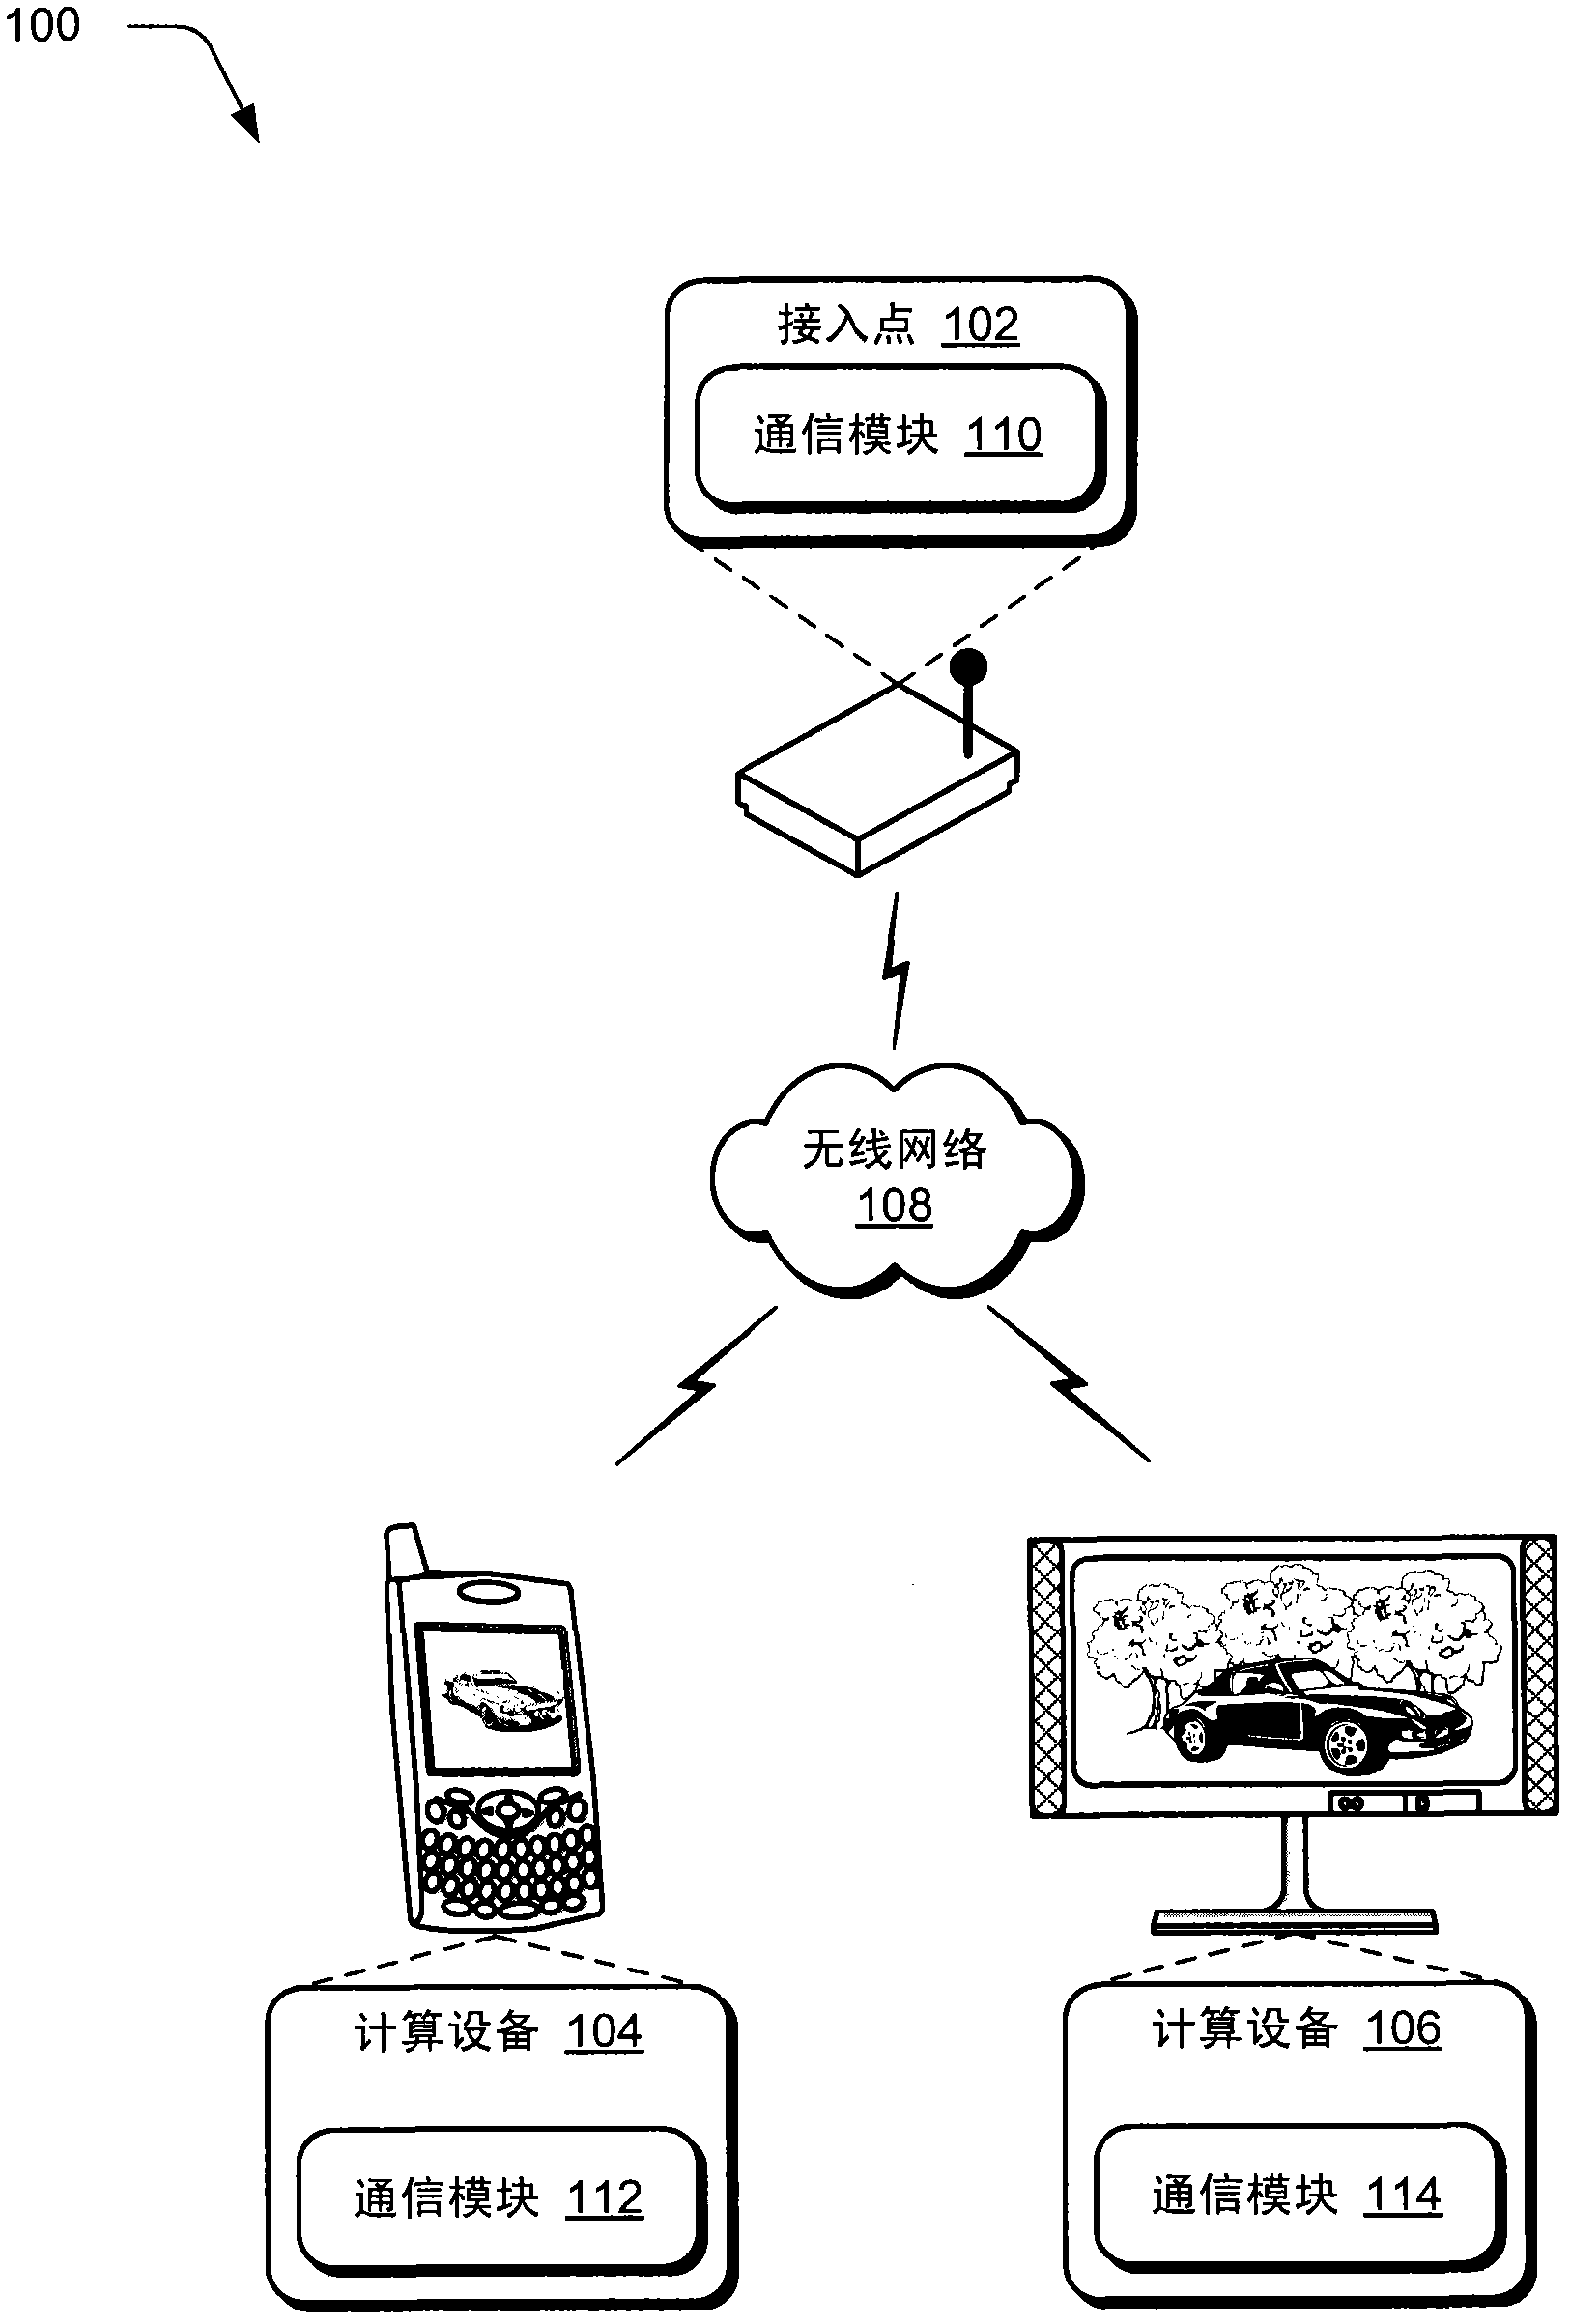 Wireless communication techniques